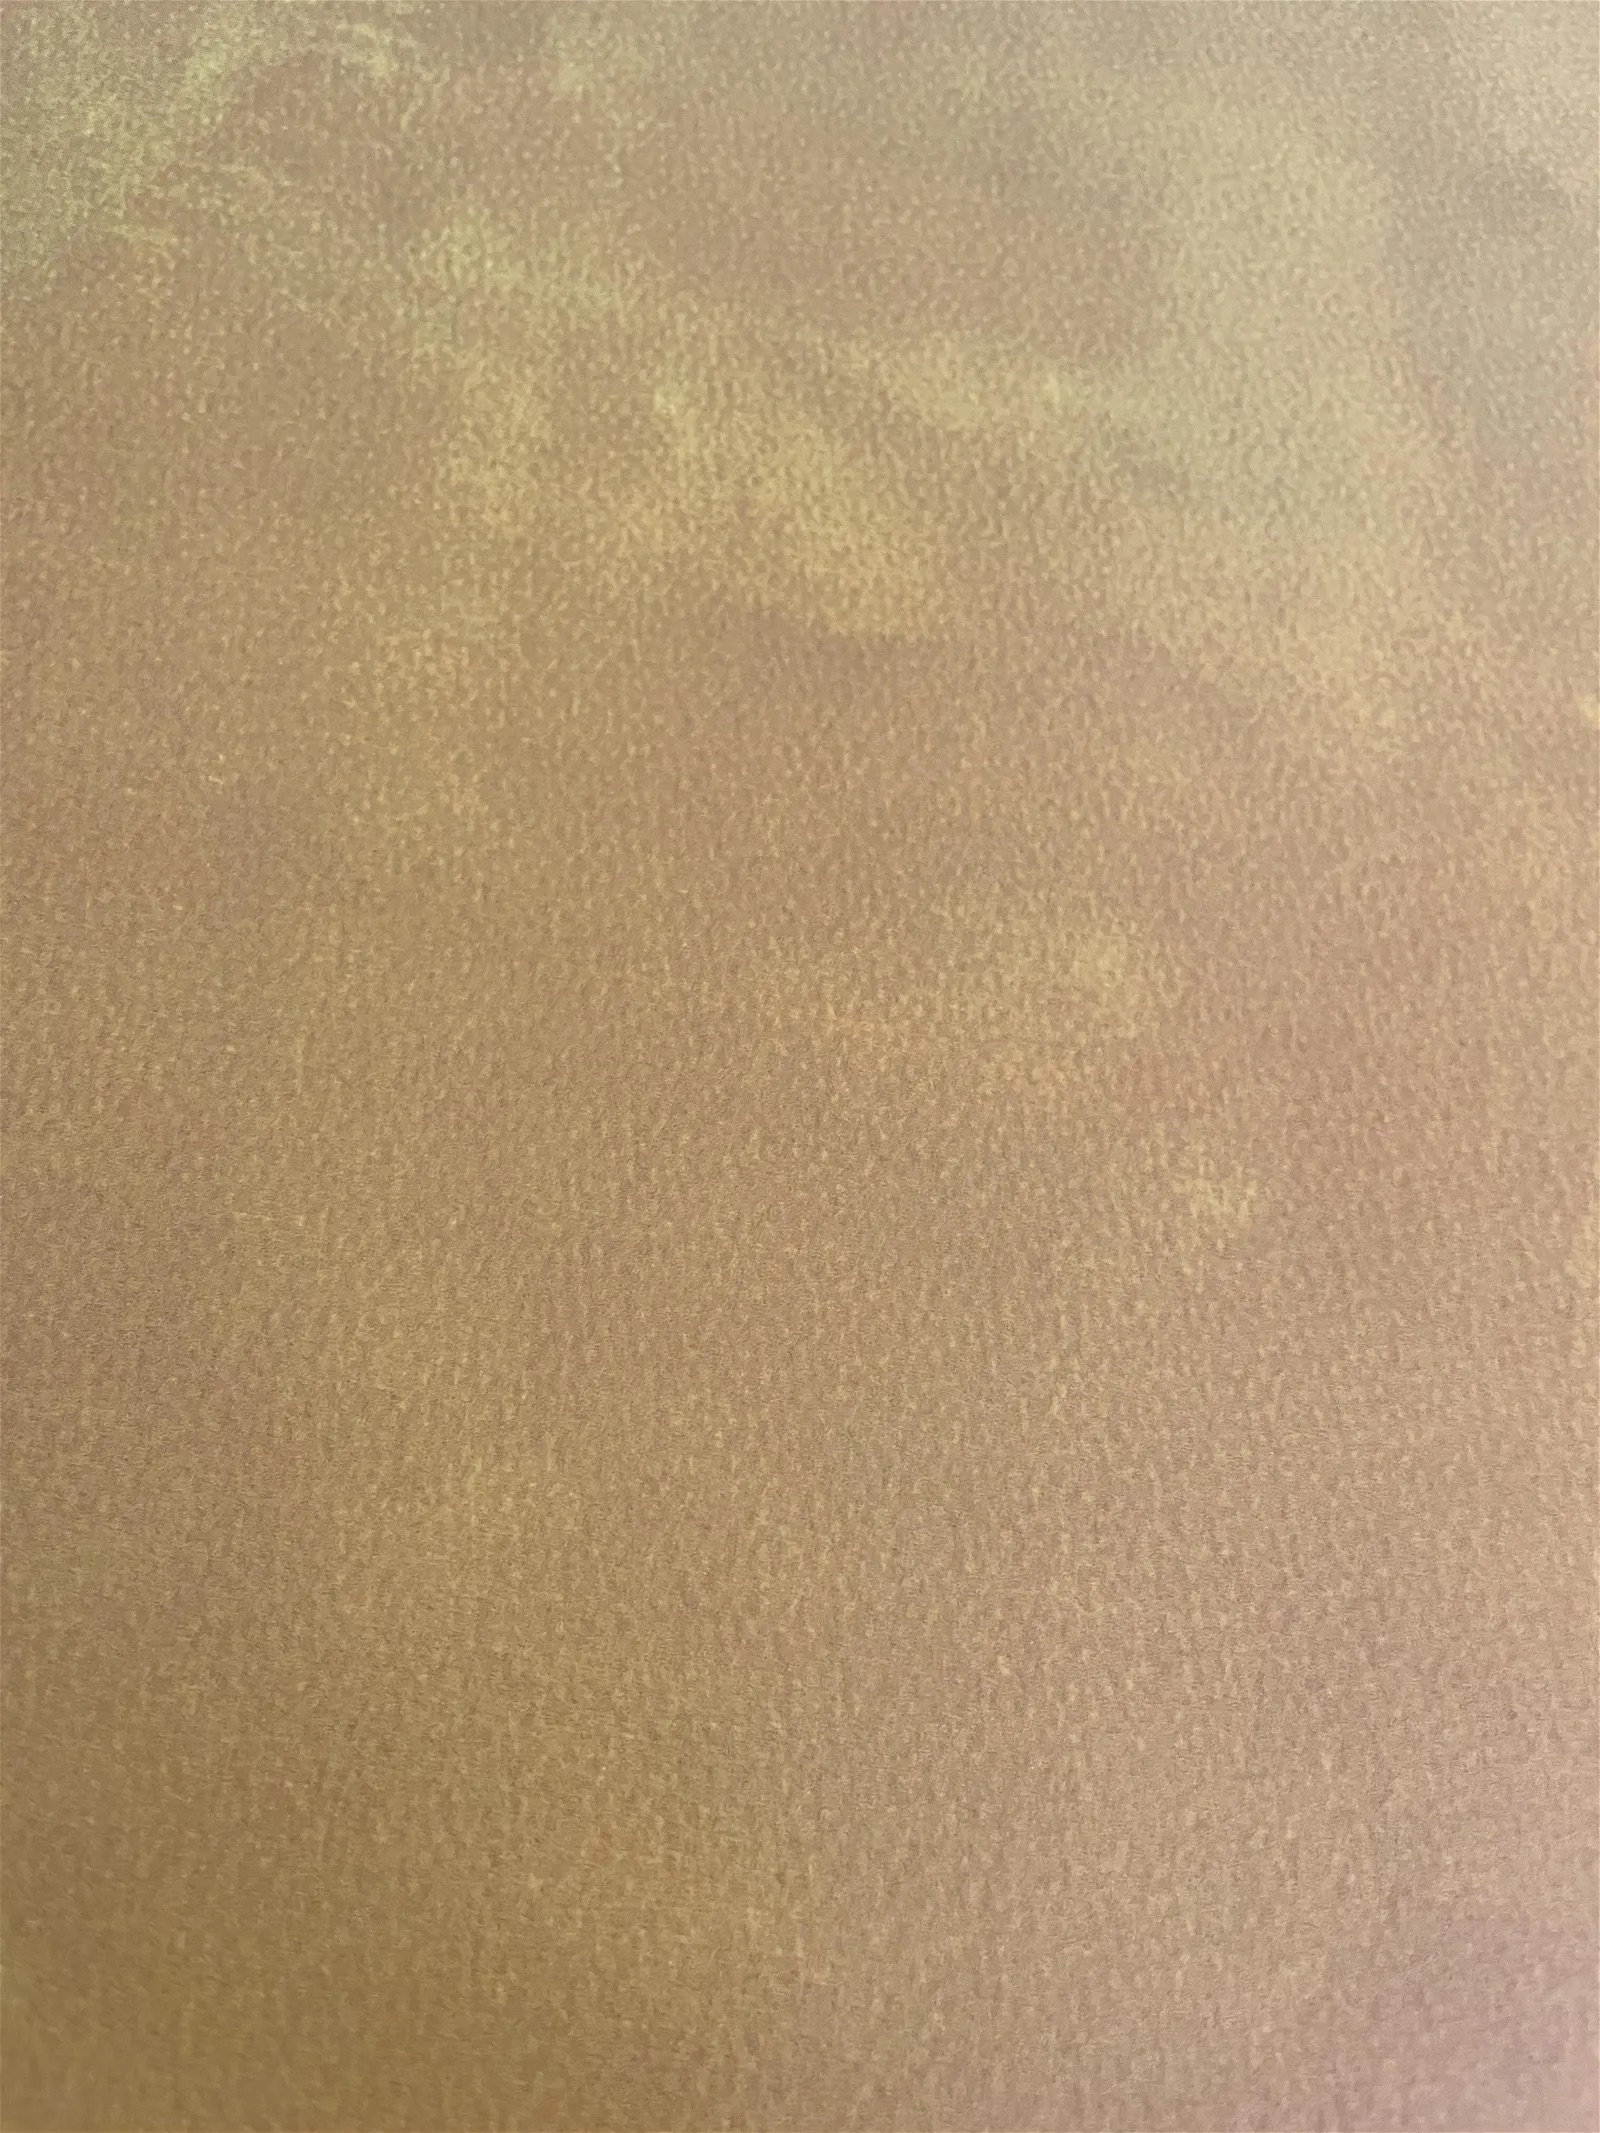 Mark Rothko "Untitled" Screenprint - Image 7 of 8